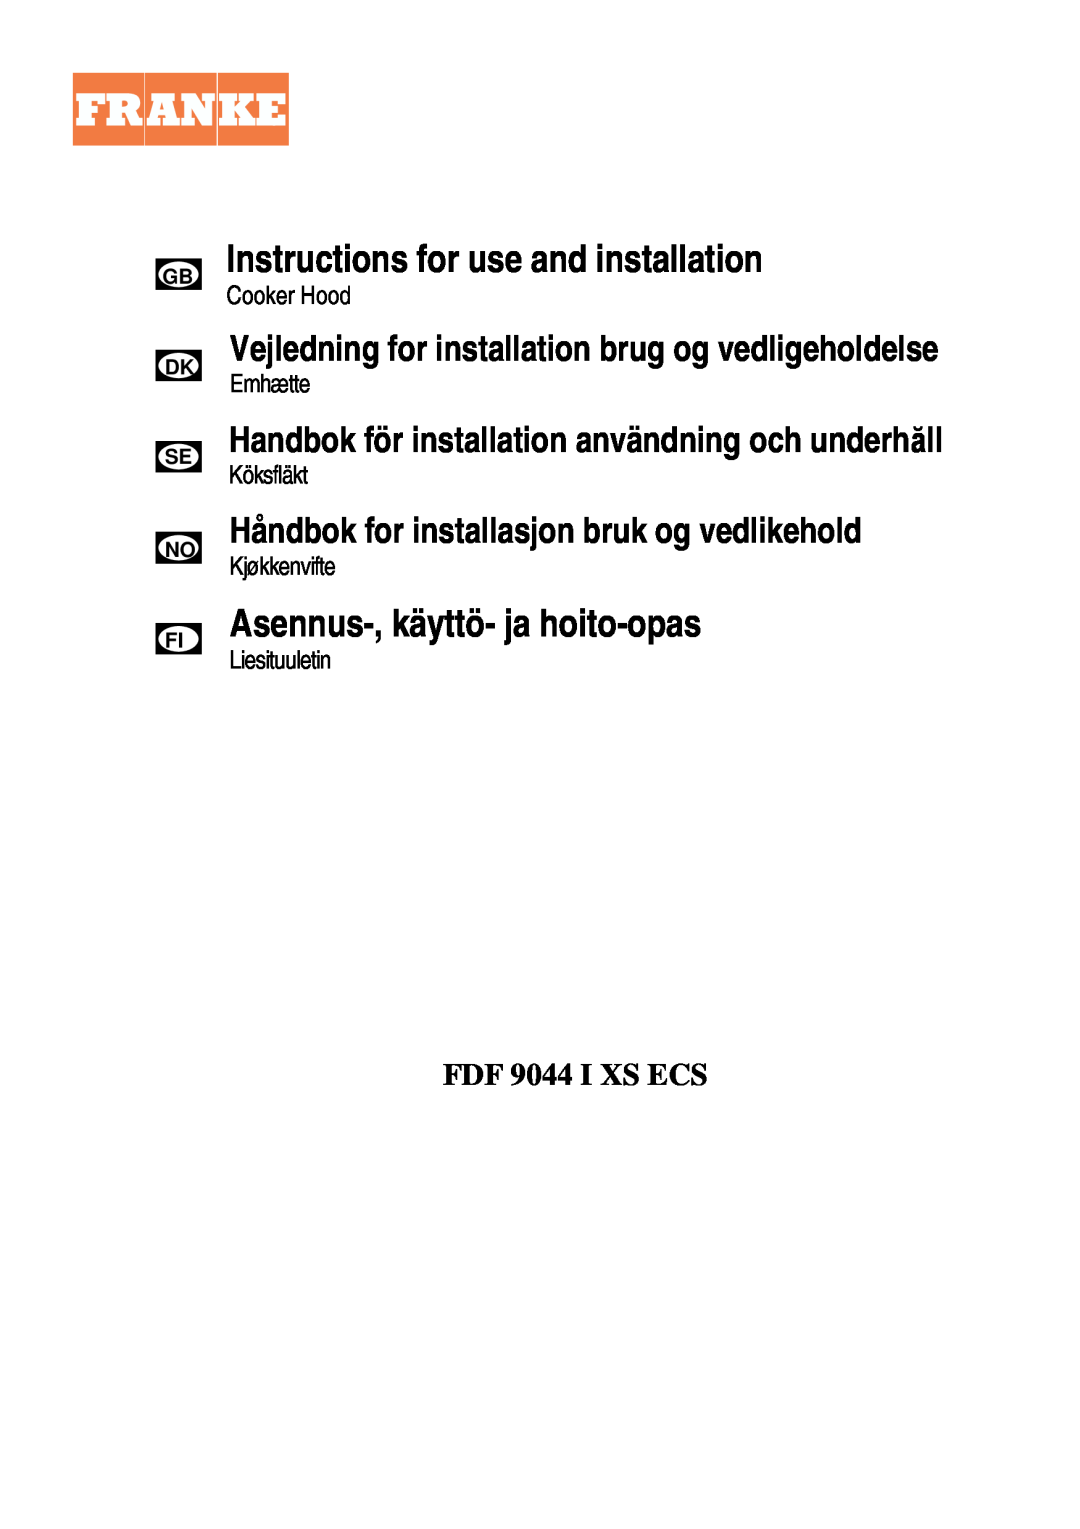 Franke Consumer Products FDF 9044 I XS ECS manual Instructions for use and installation, Asennus-,käyttö- ja hoito-opas 